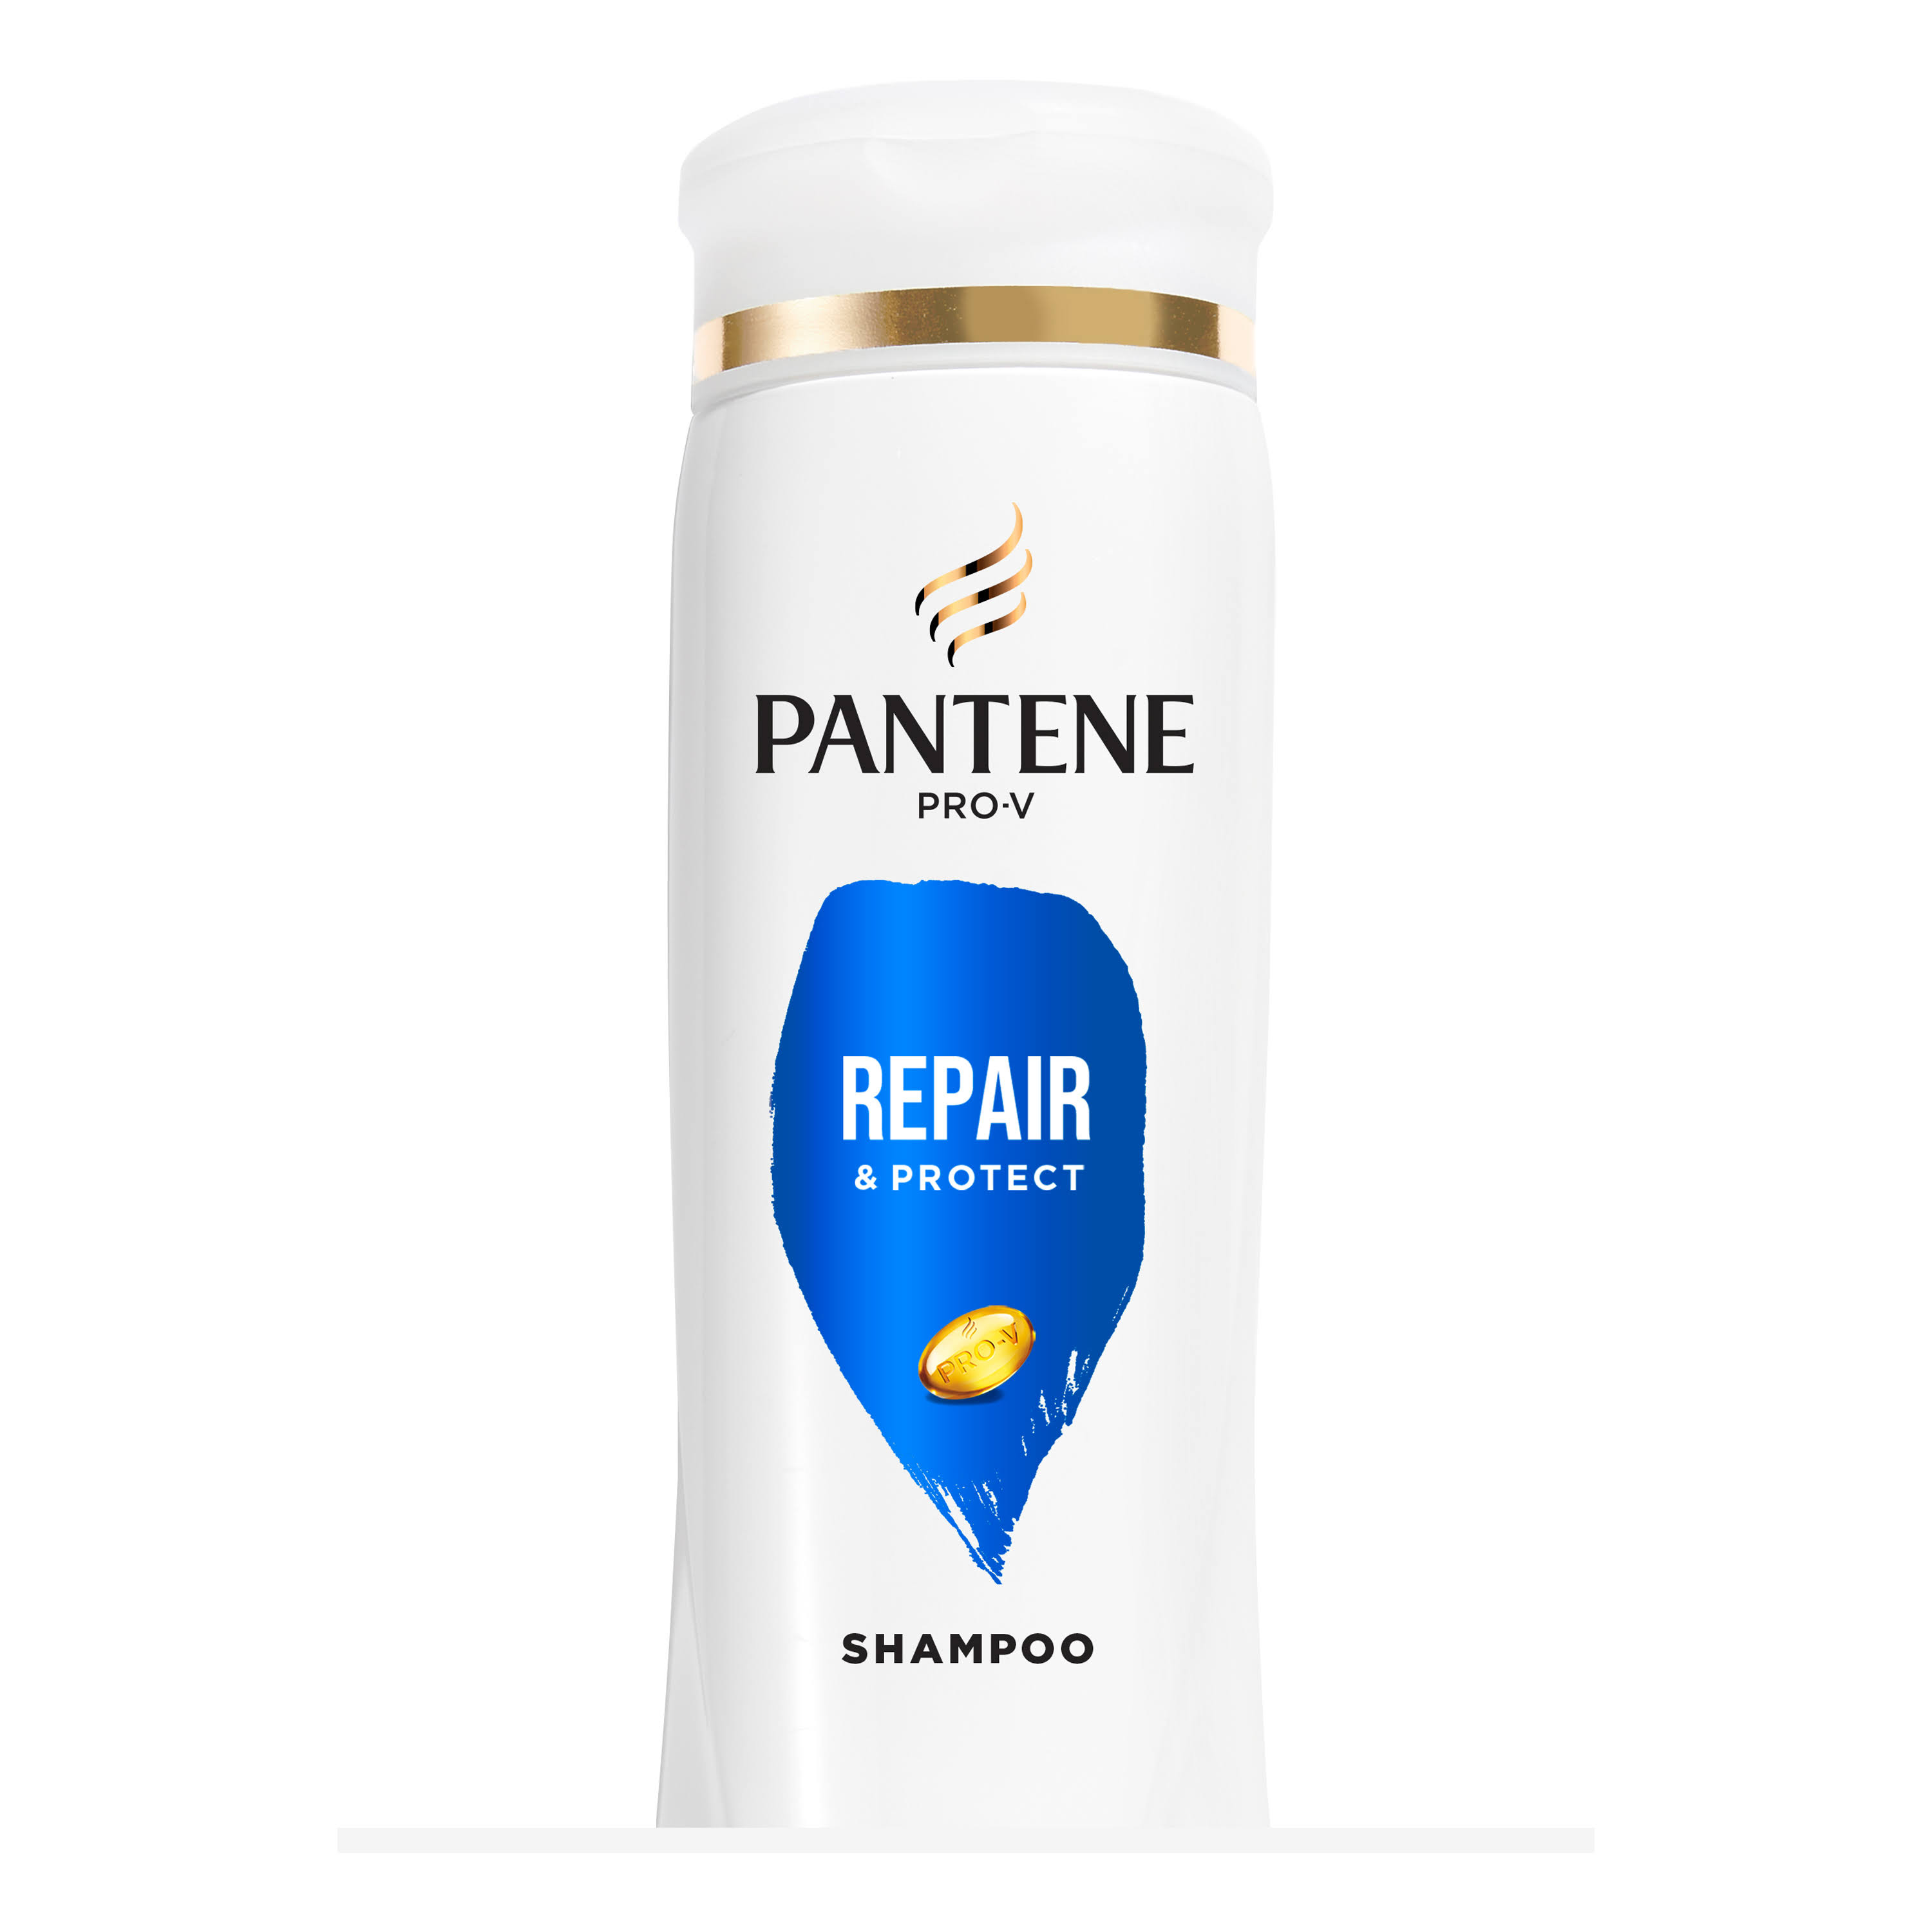 Pantene Pro-V Shampoo, Repair & Protect - 355 ml